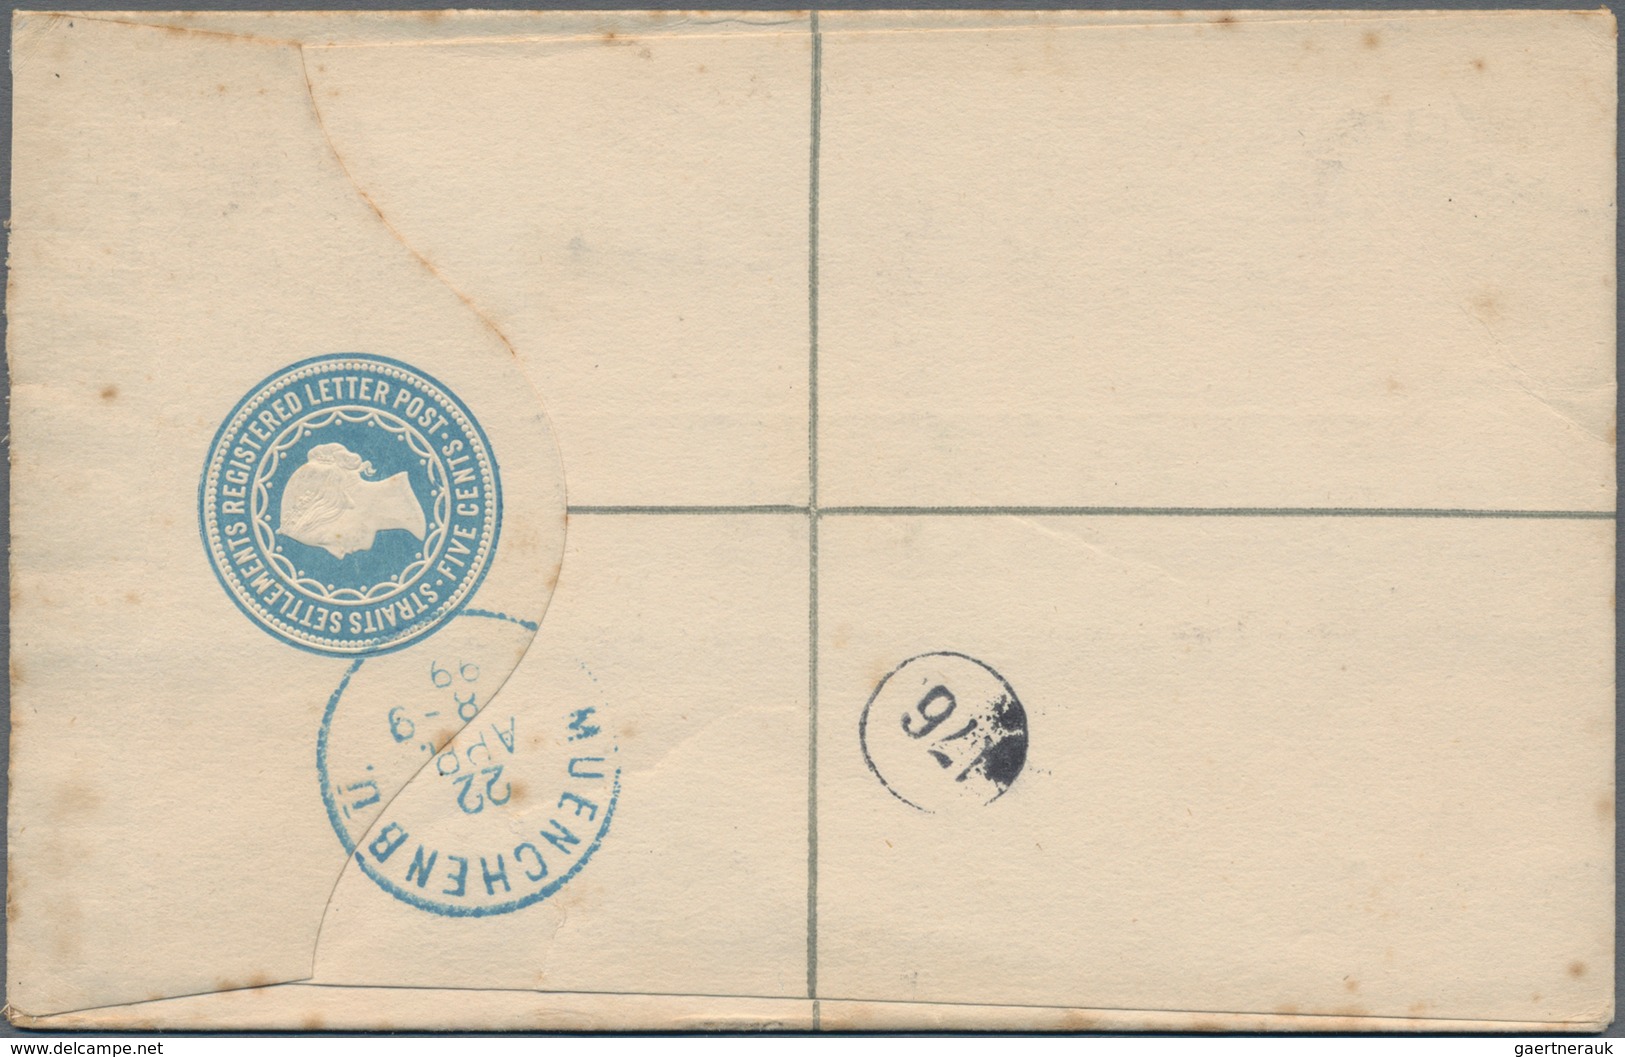 Malaiische Staaten - Straits Settlements: 1899, Registration Envelope 5 C. Uprated QV 1 C., 8 C. Blu - Straits Settlements